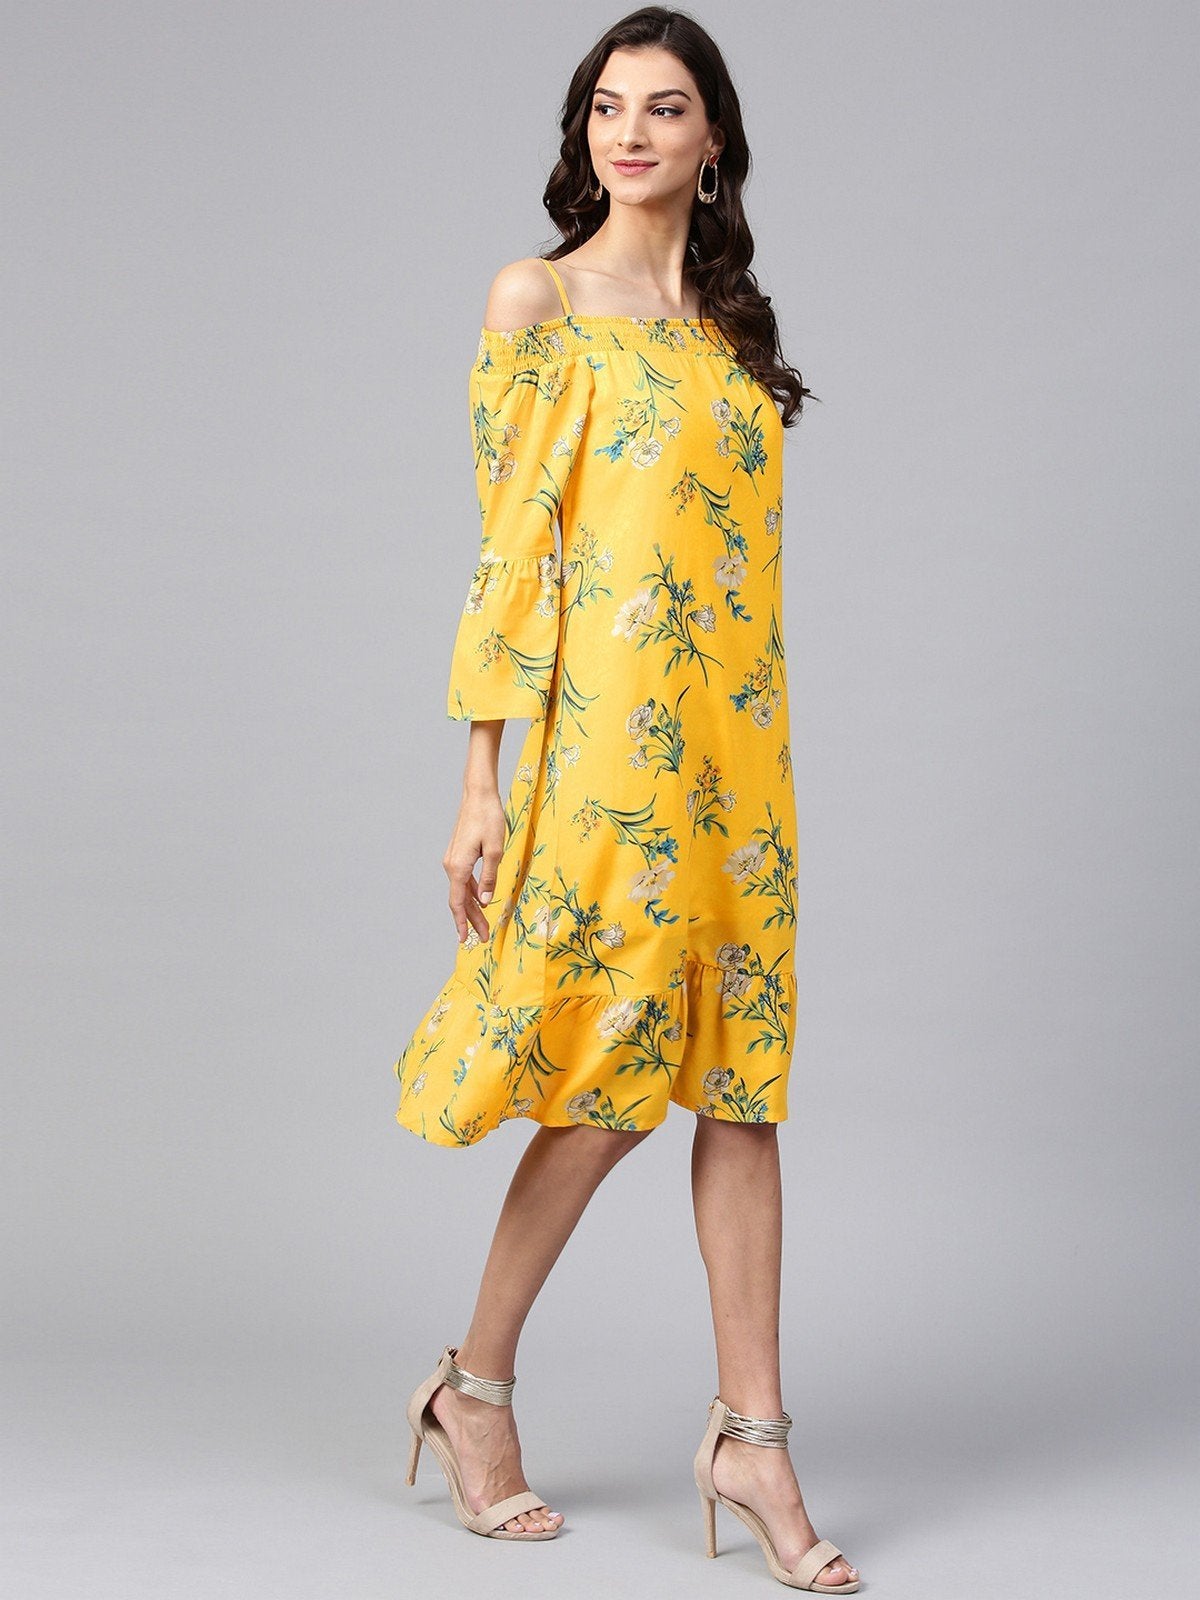 Women's Yellow Floral Off-Shoulder Bardot Dress - Pannkh